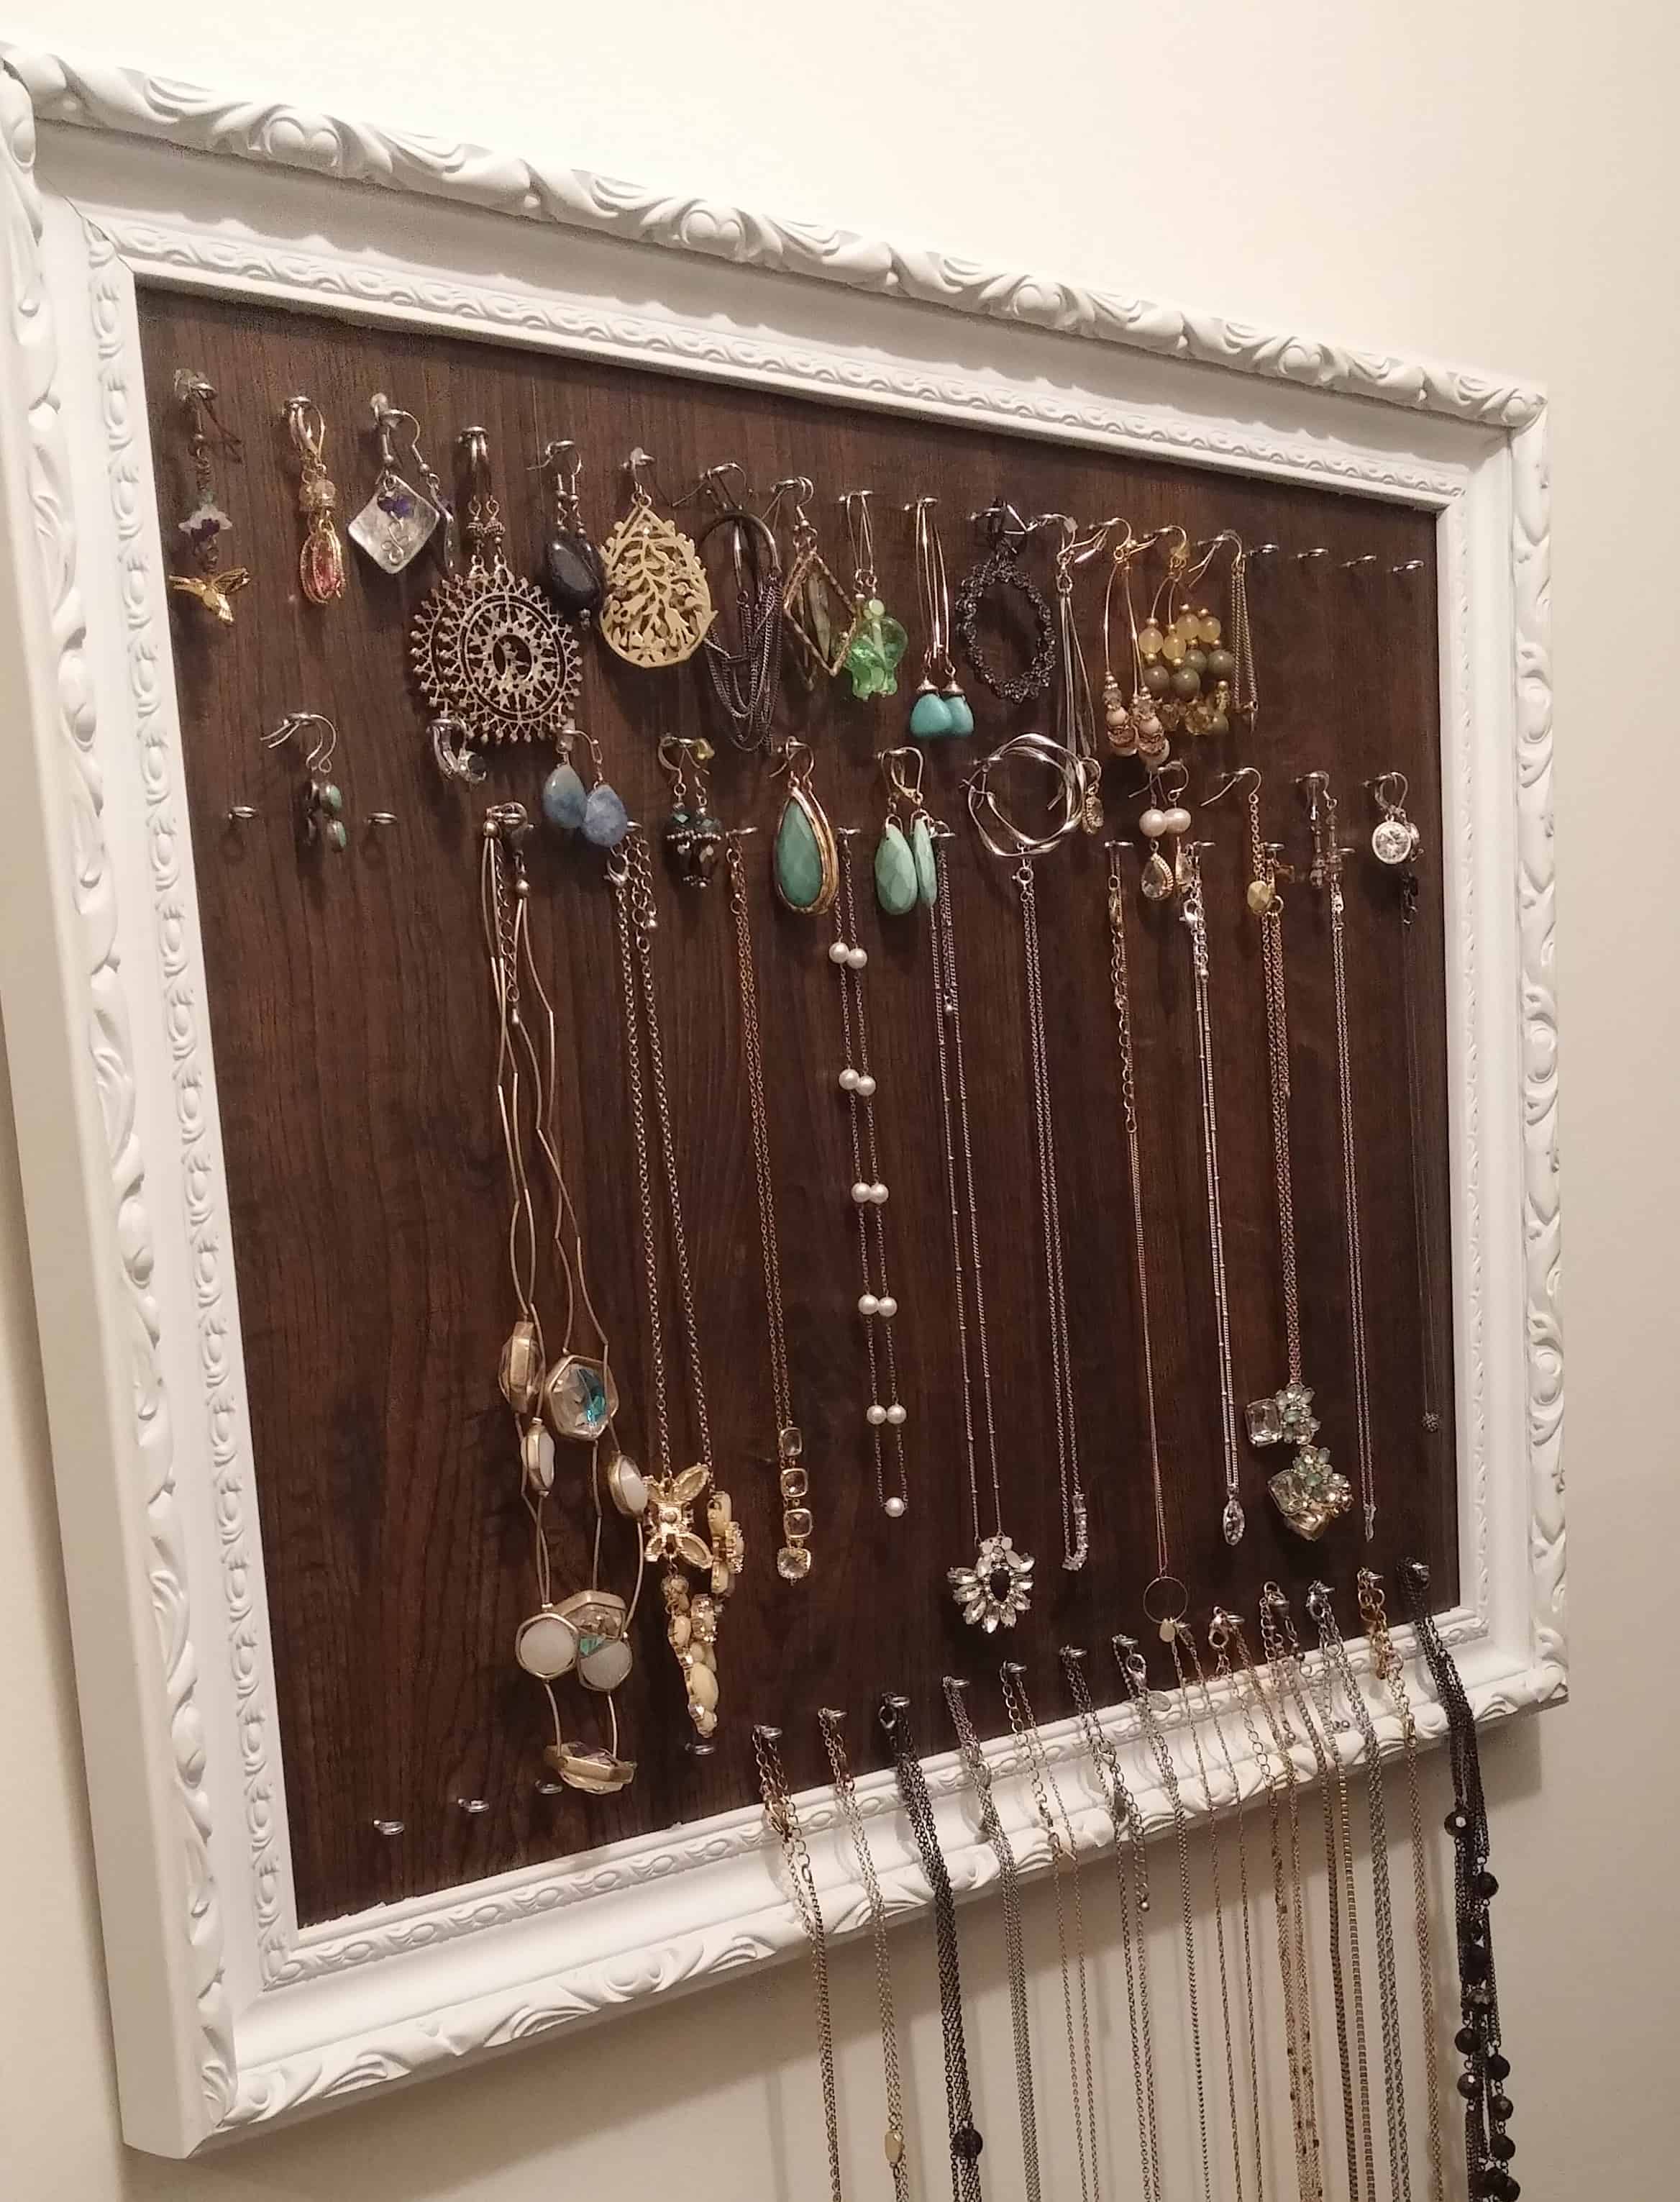 How to Make a DIY Jewelry Frame Organizer